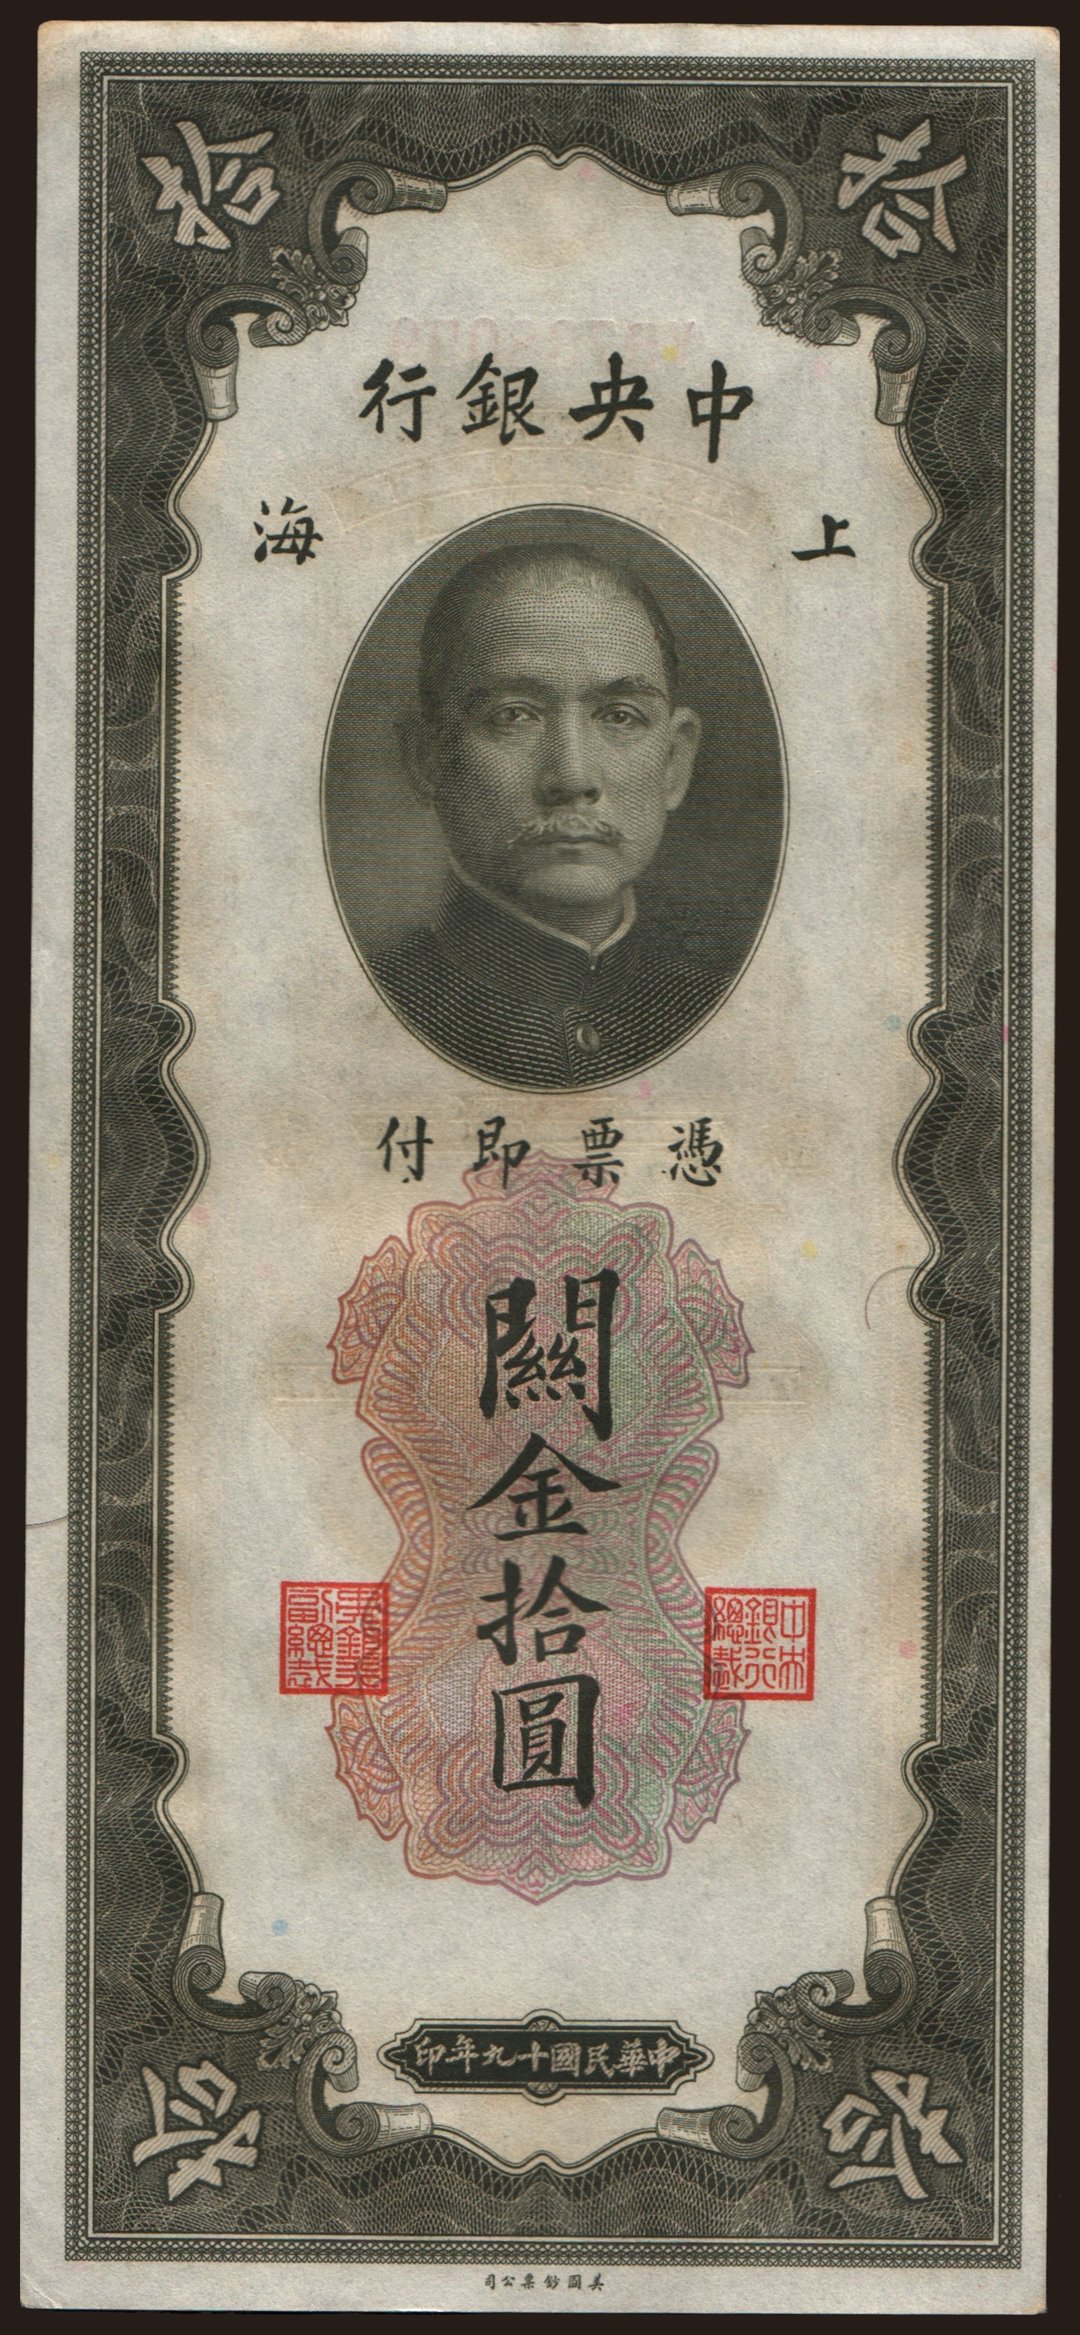 Central Bank of China, 10 gold units, 1930